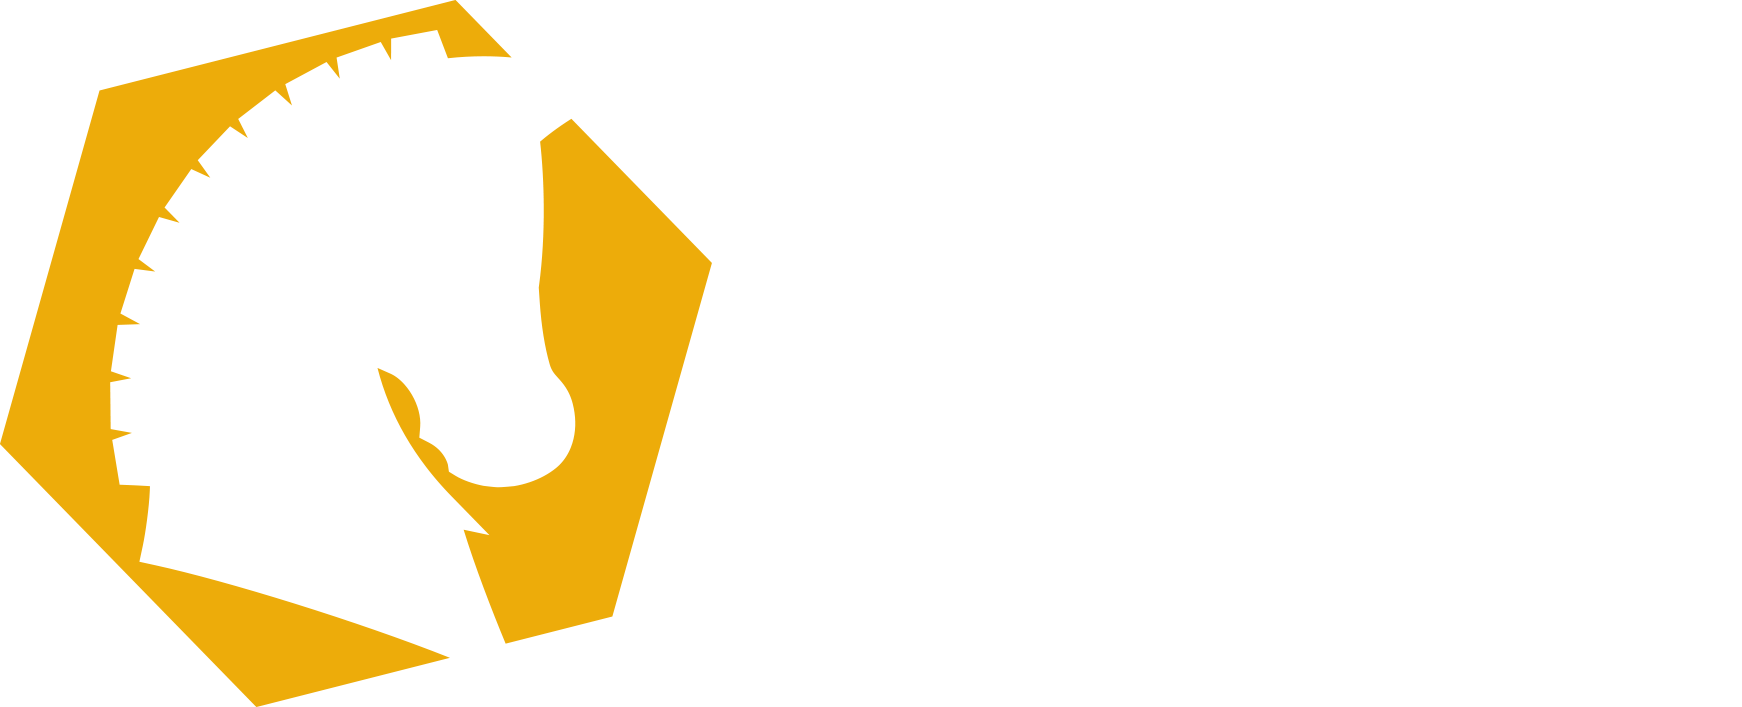 Workhorse Game Studio Logo